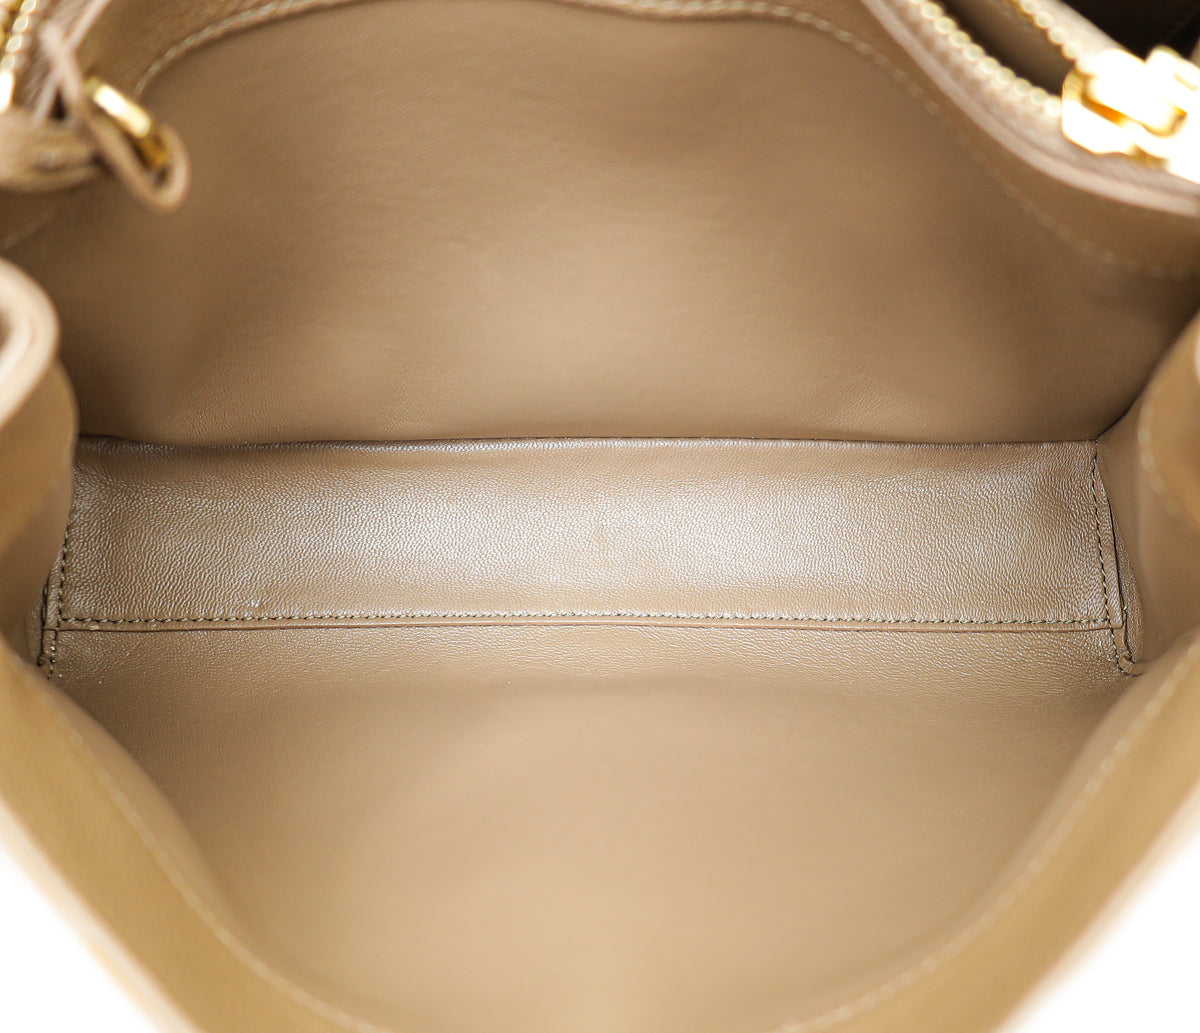 Celine Etoupe 16 Top Handle Small Bag